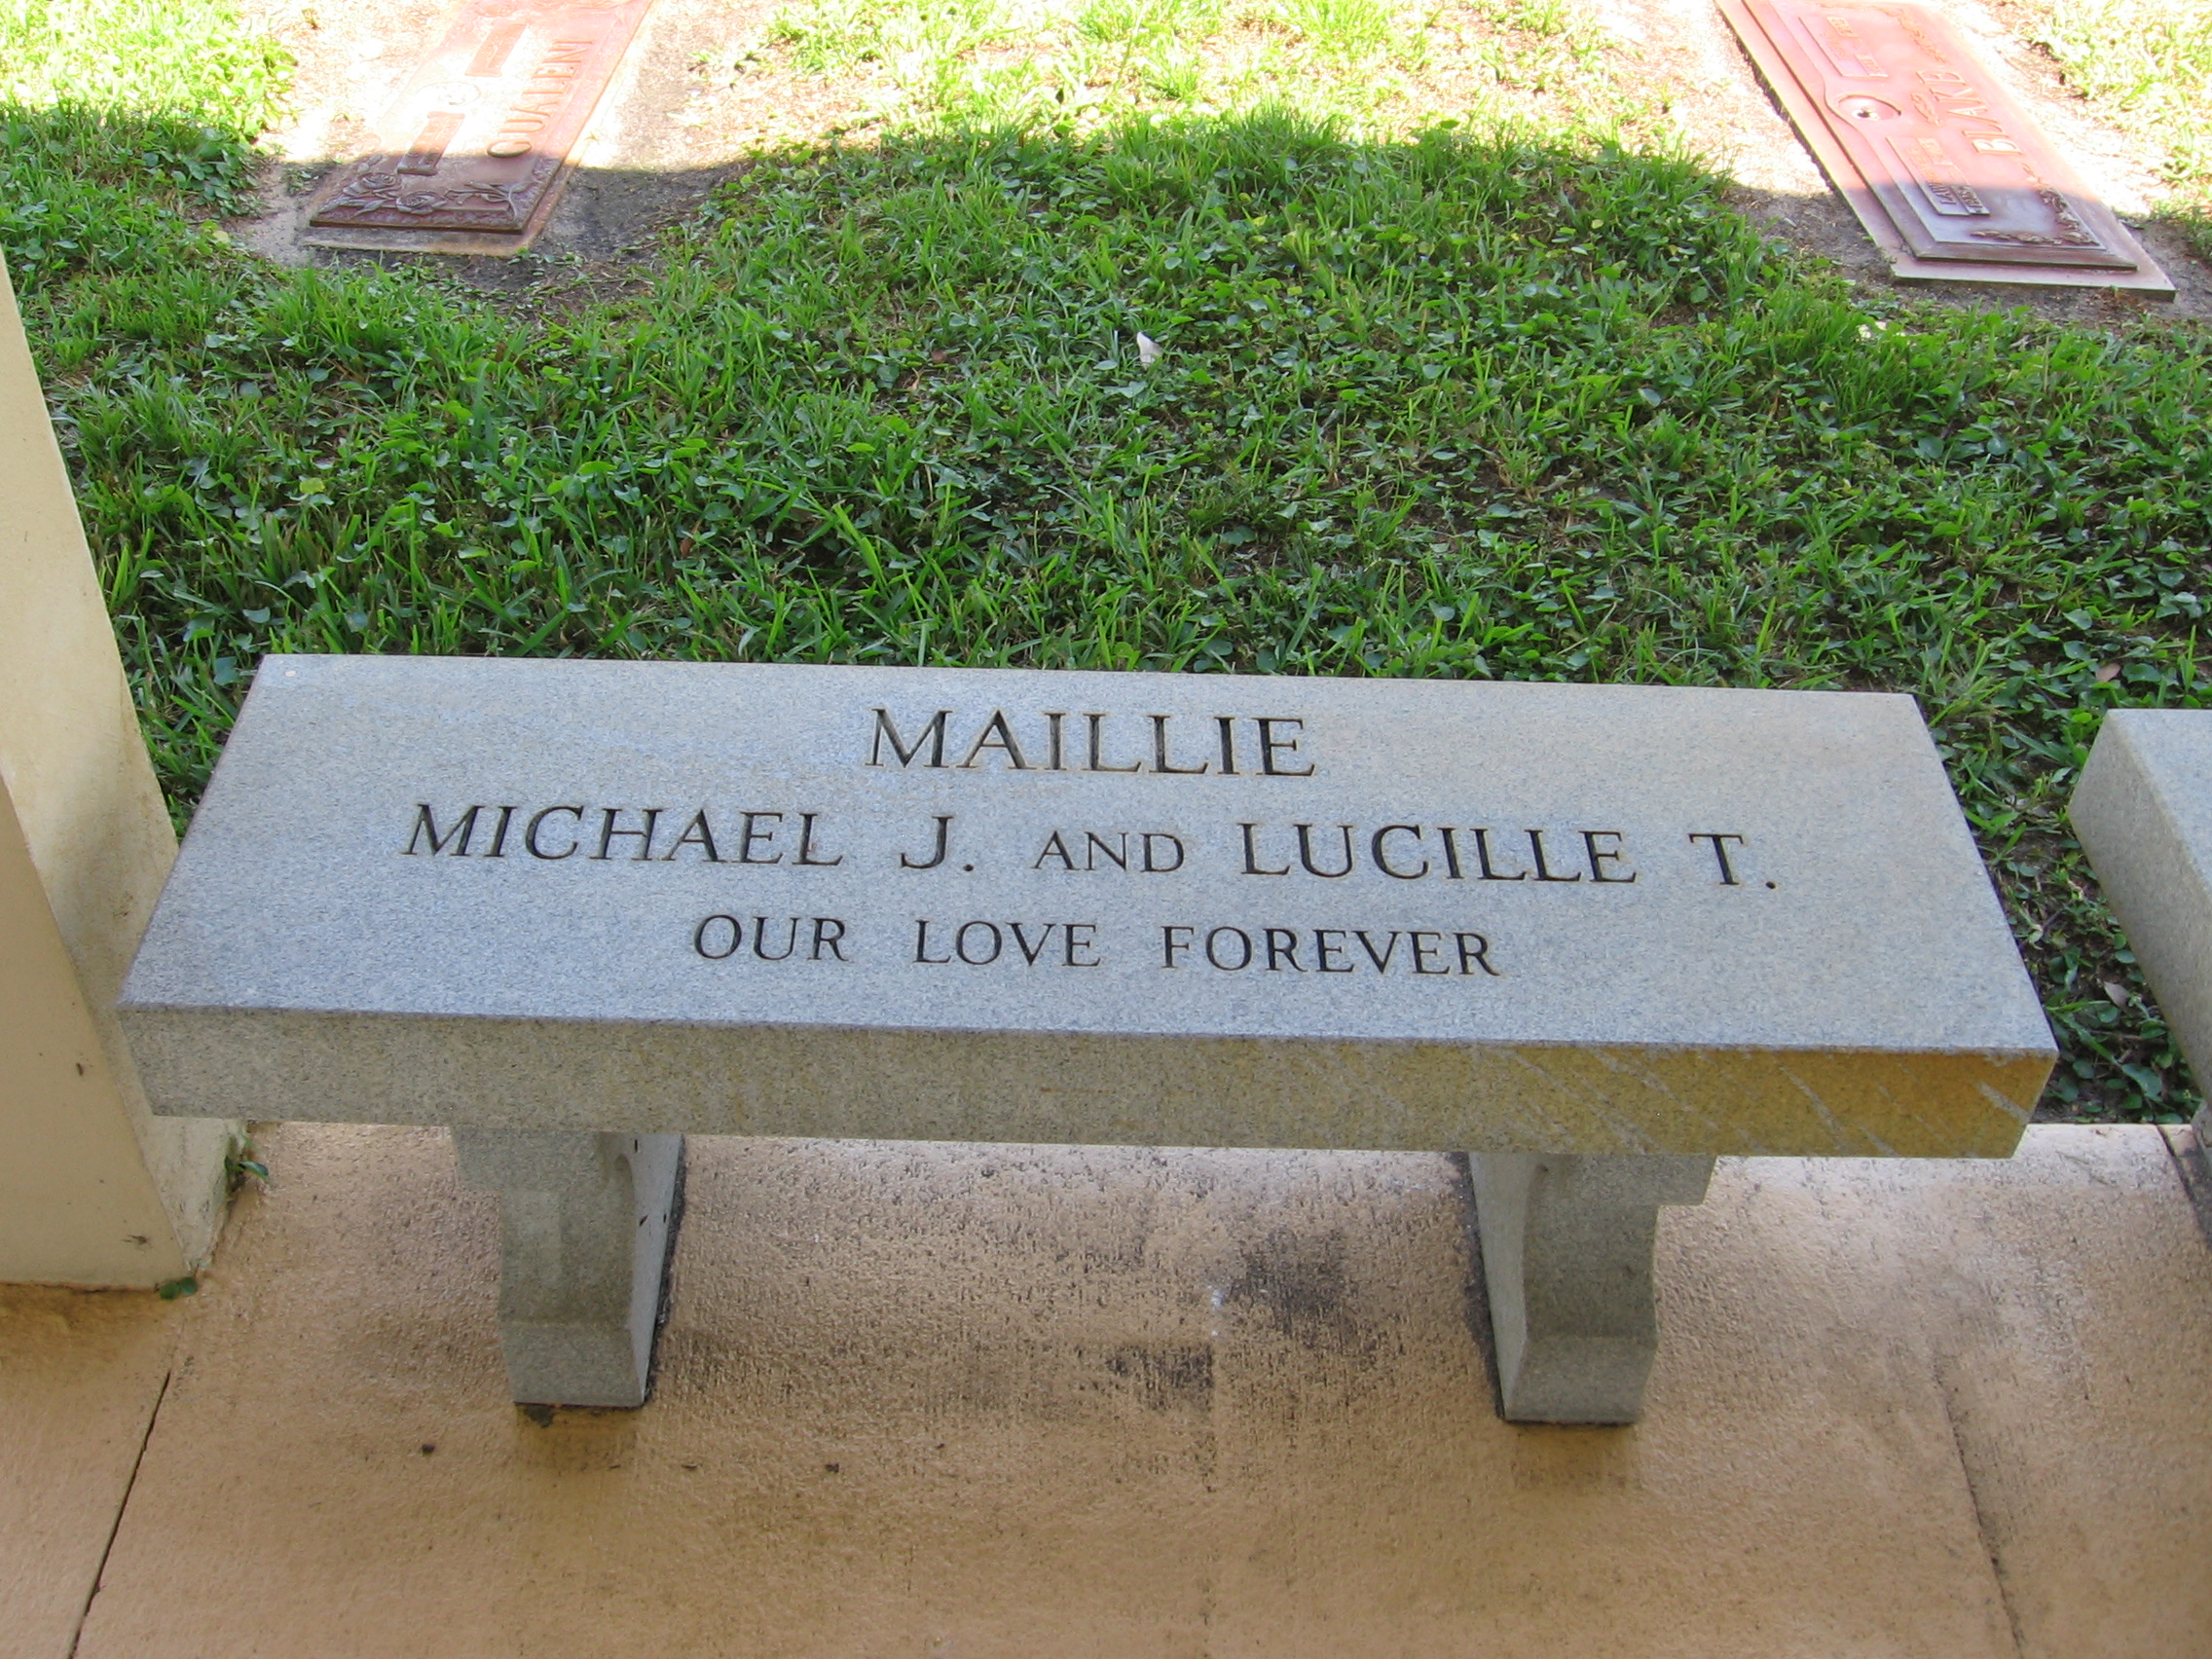 Michael J Maillie